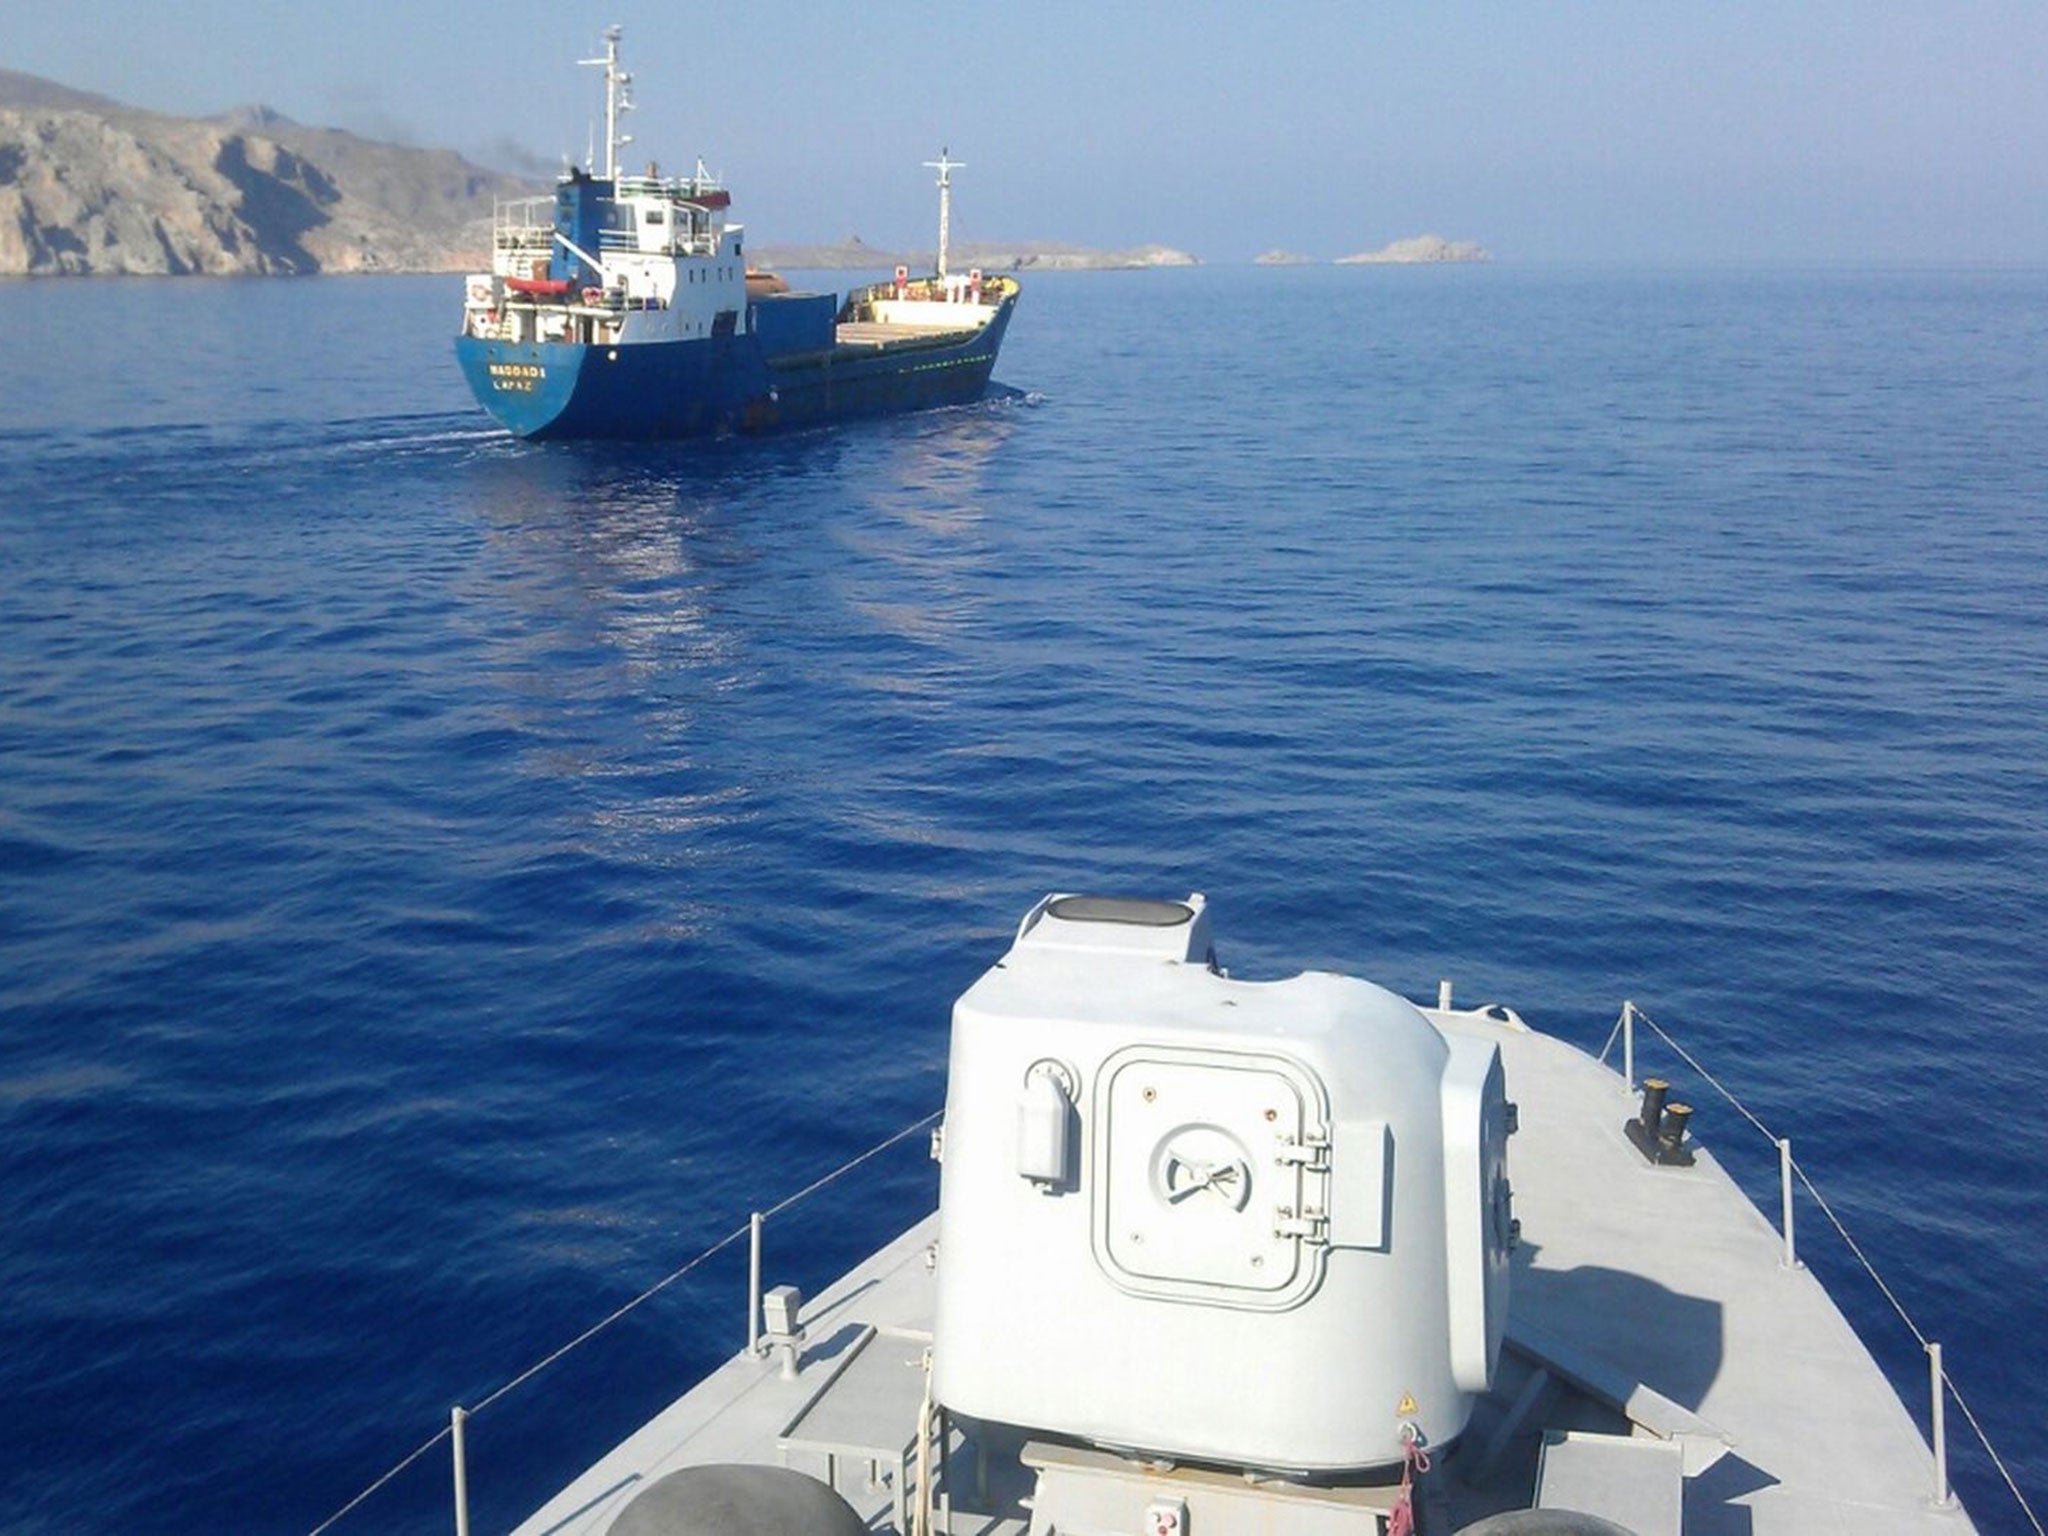 The coastguard intercepted the vessel about 20 nautical miles northeast of Crete